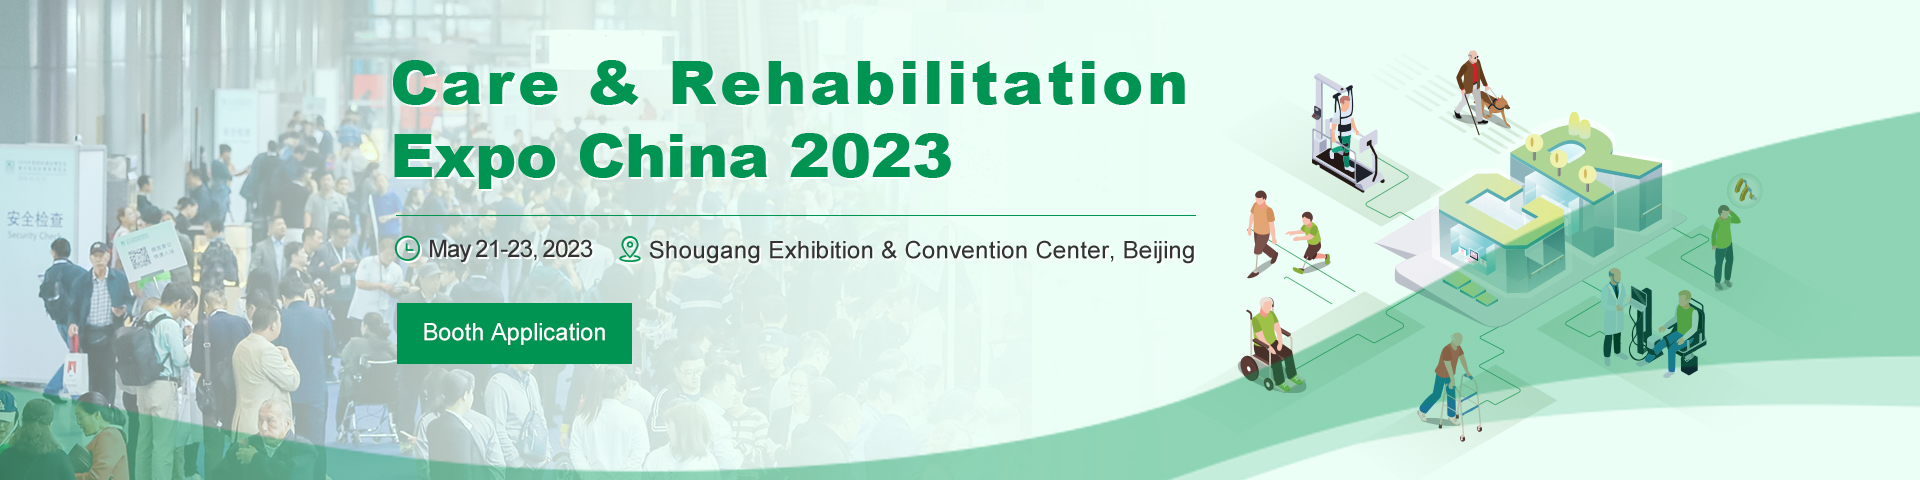 Care & Rehabilitation Expo China 2023, Shijingshan District, Beijing, China